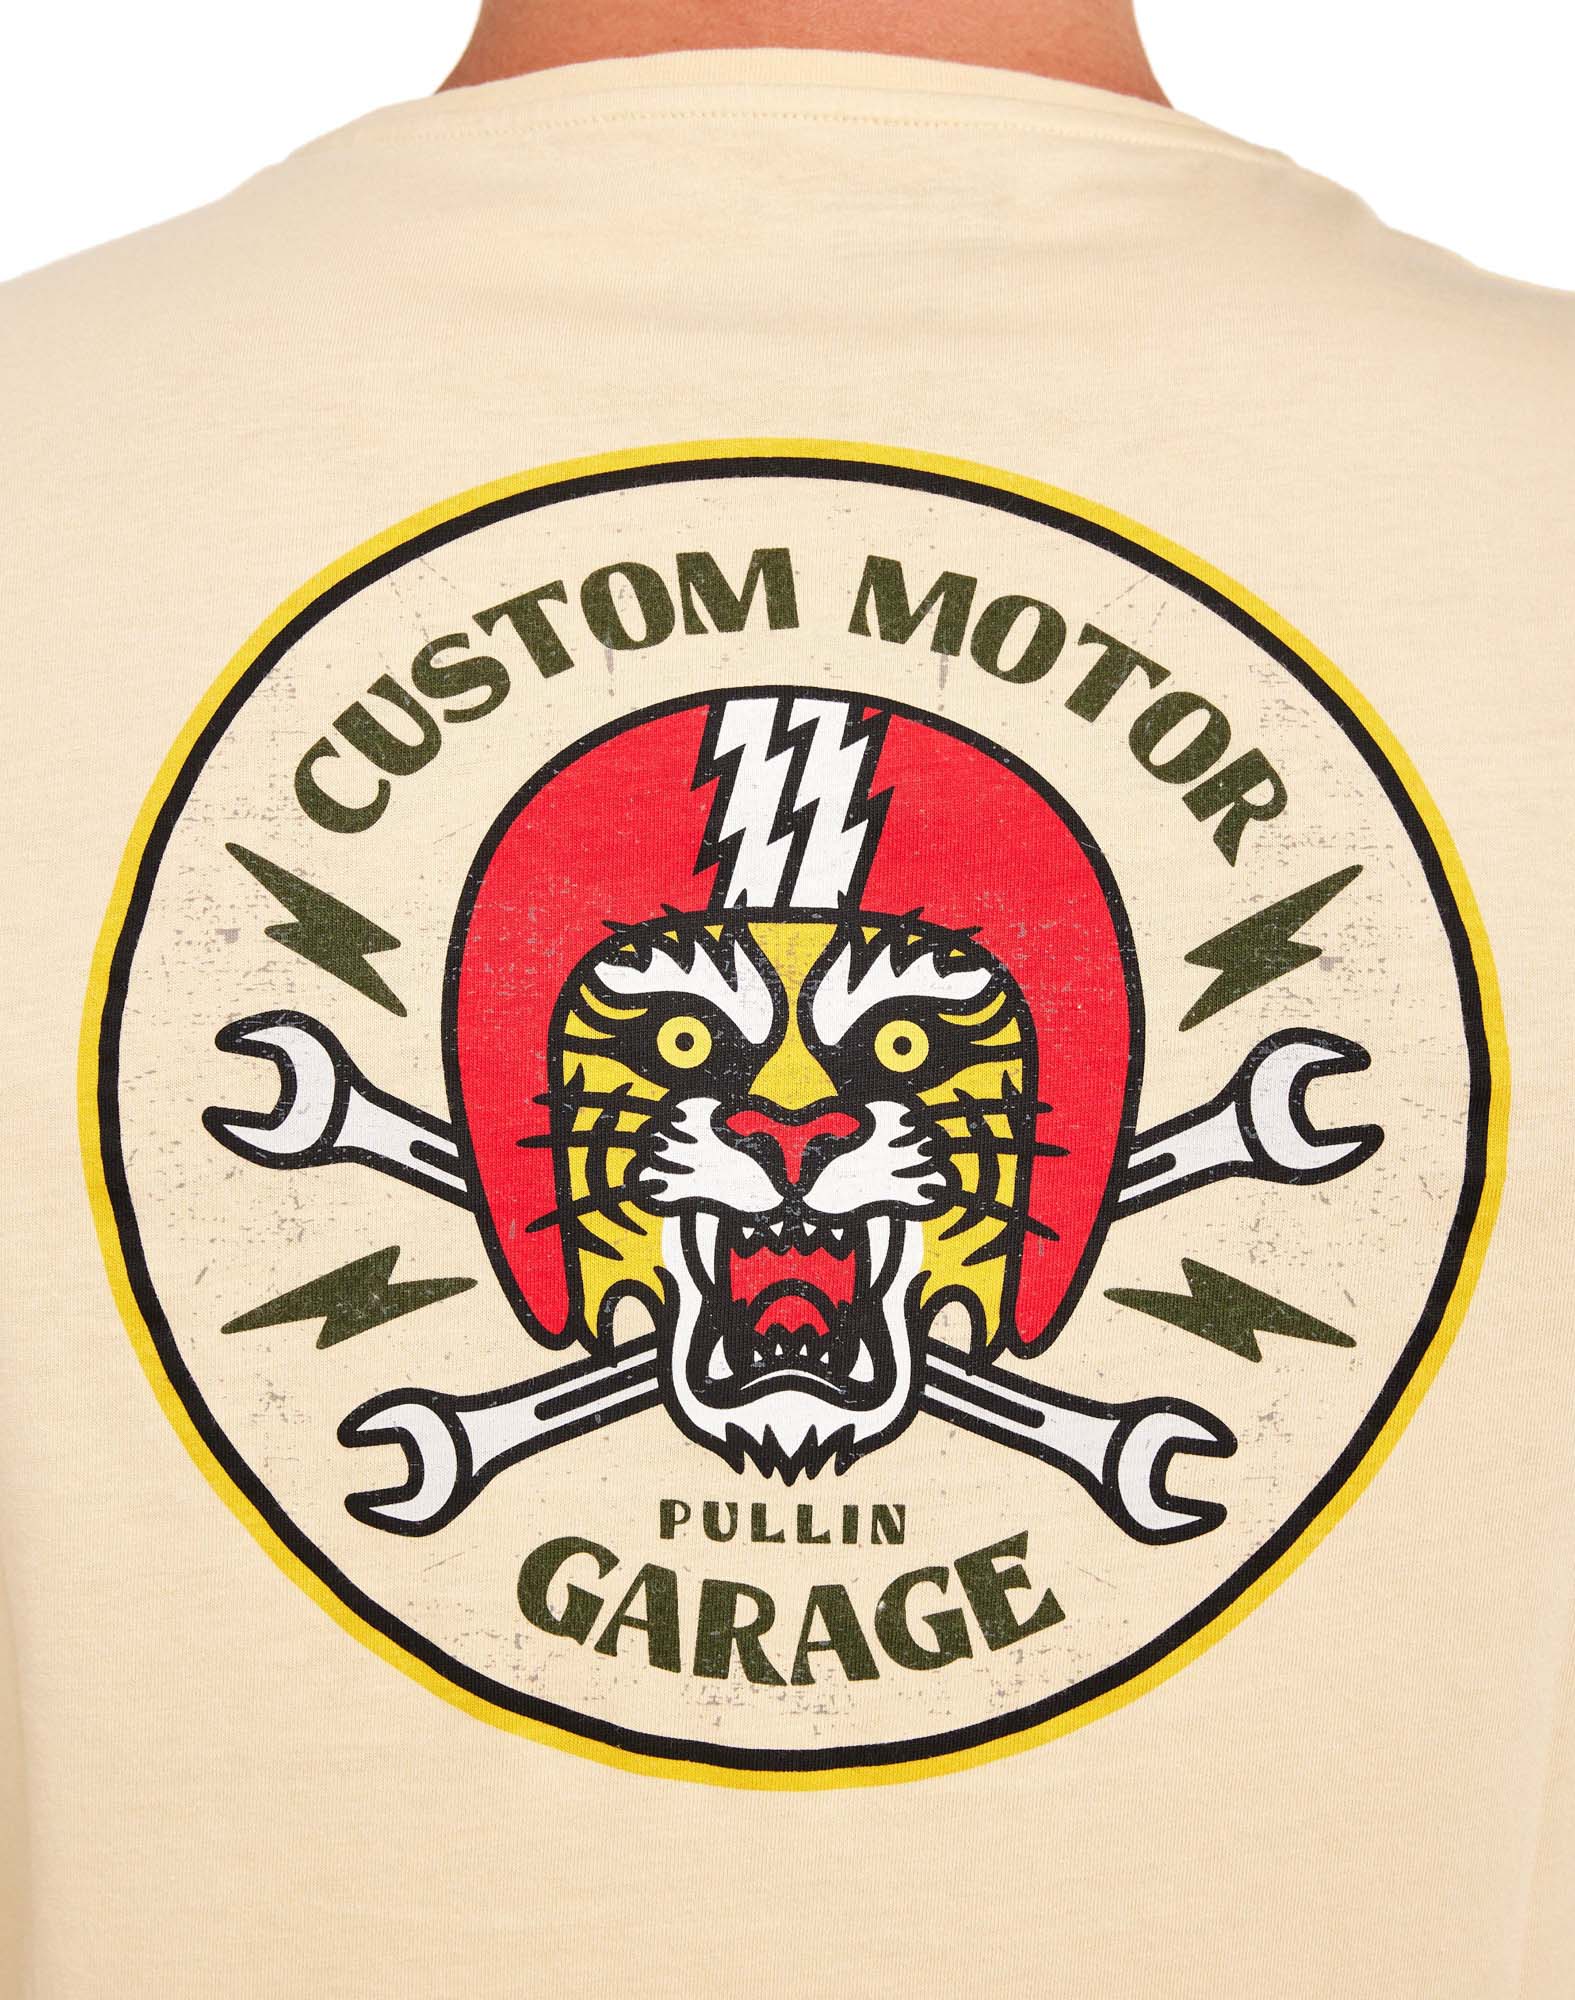 Pullin T-Shirt Garage